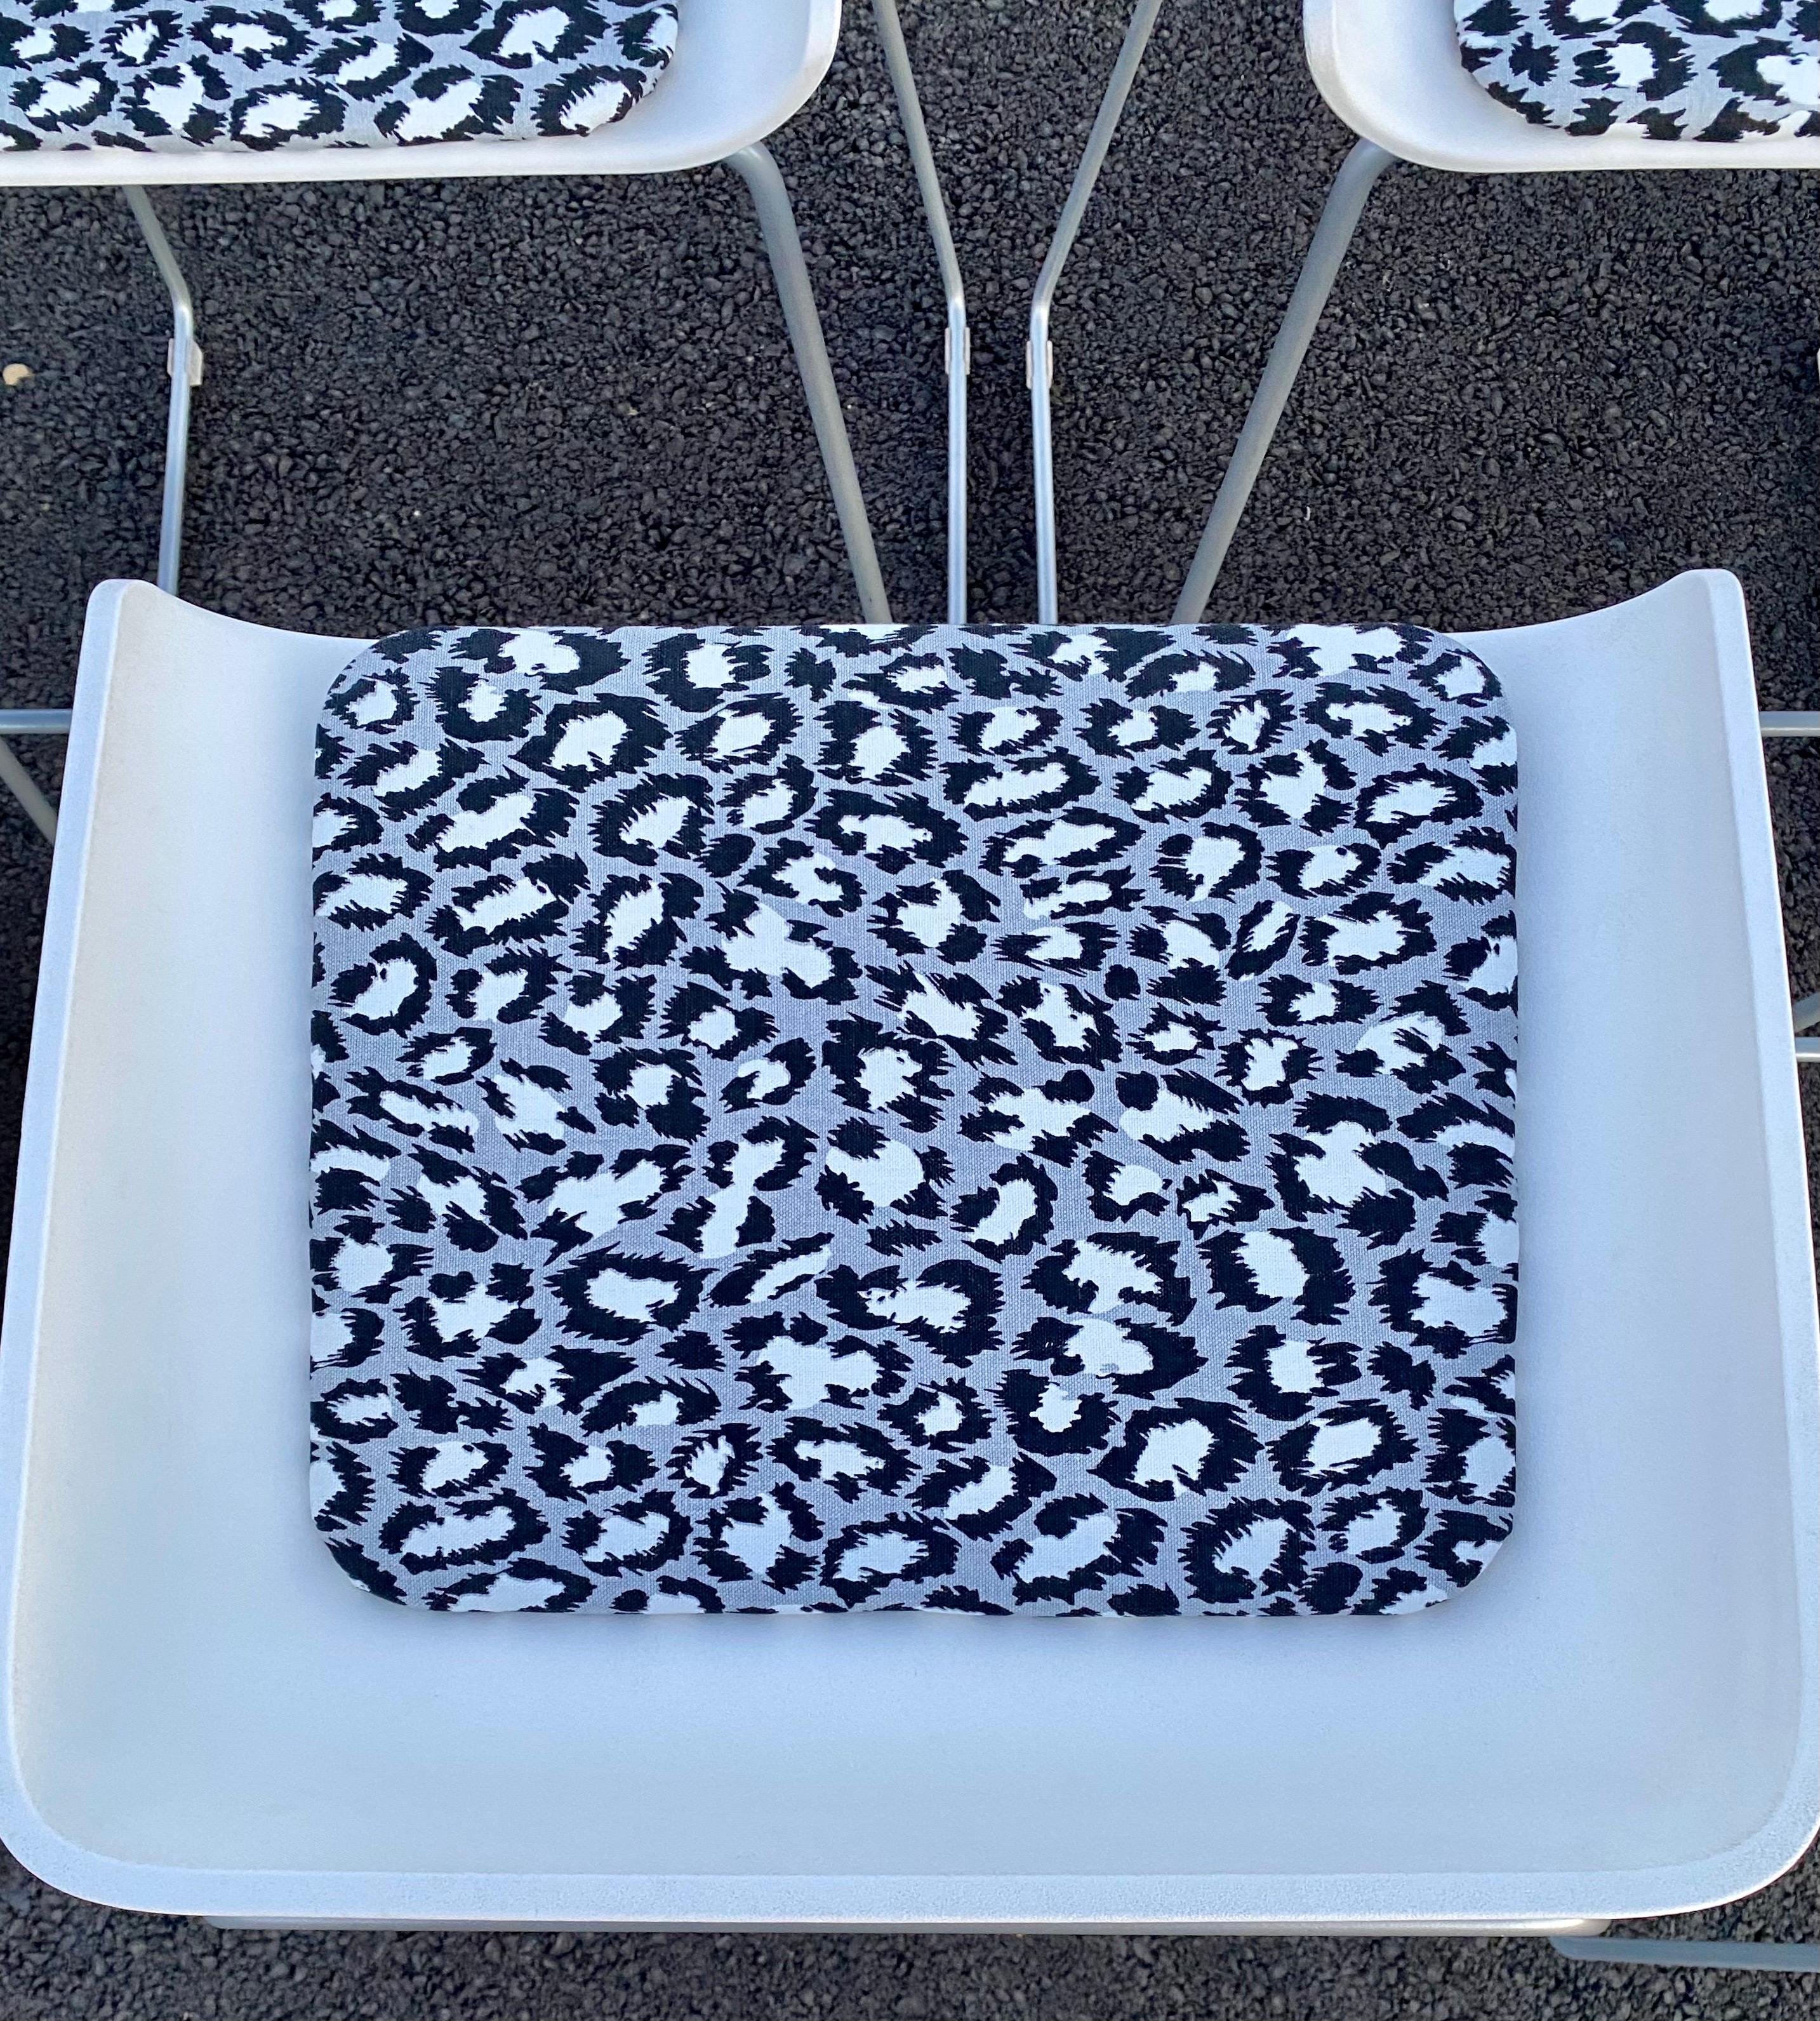 Sculptural Steelcase Bar Stools with Diane von Furstenberg Leopard Cushions For Sale 4